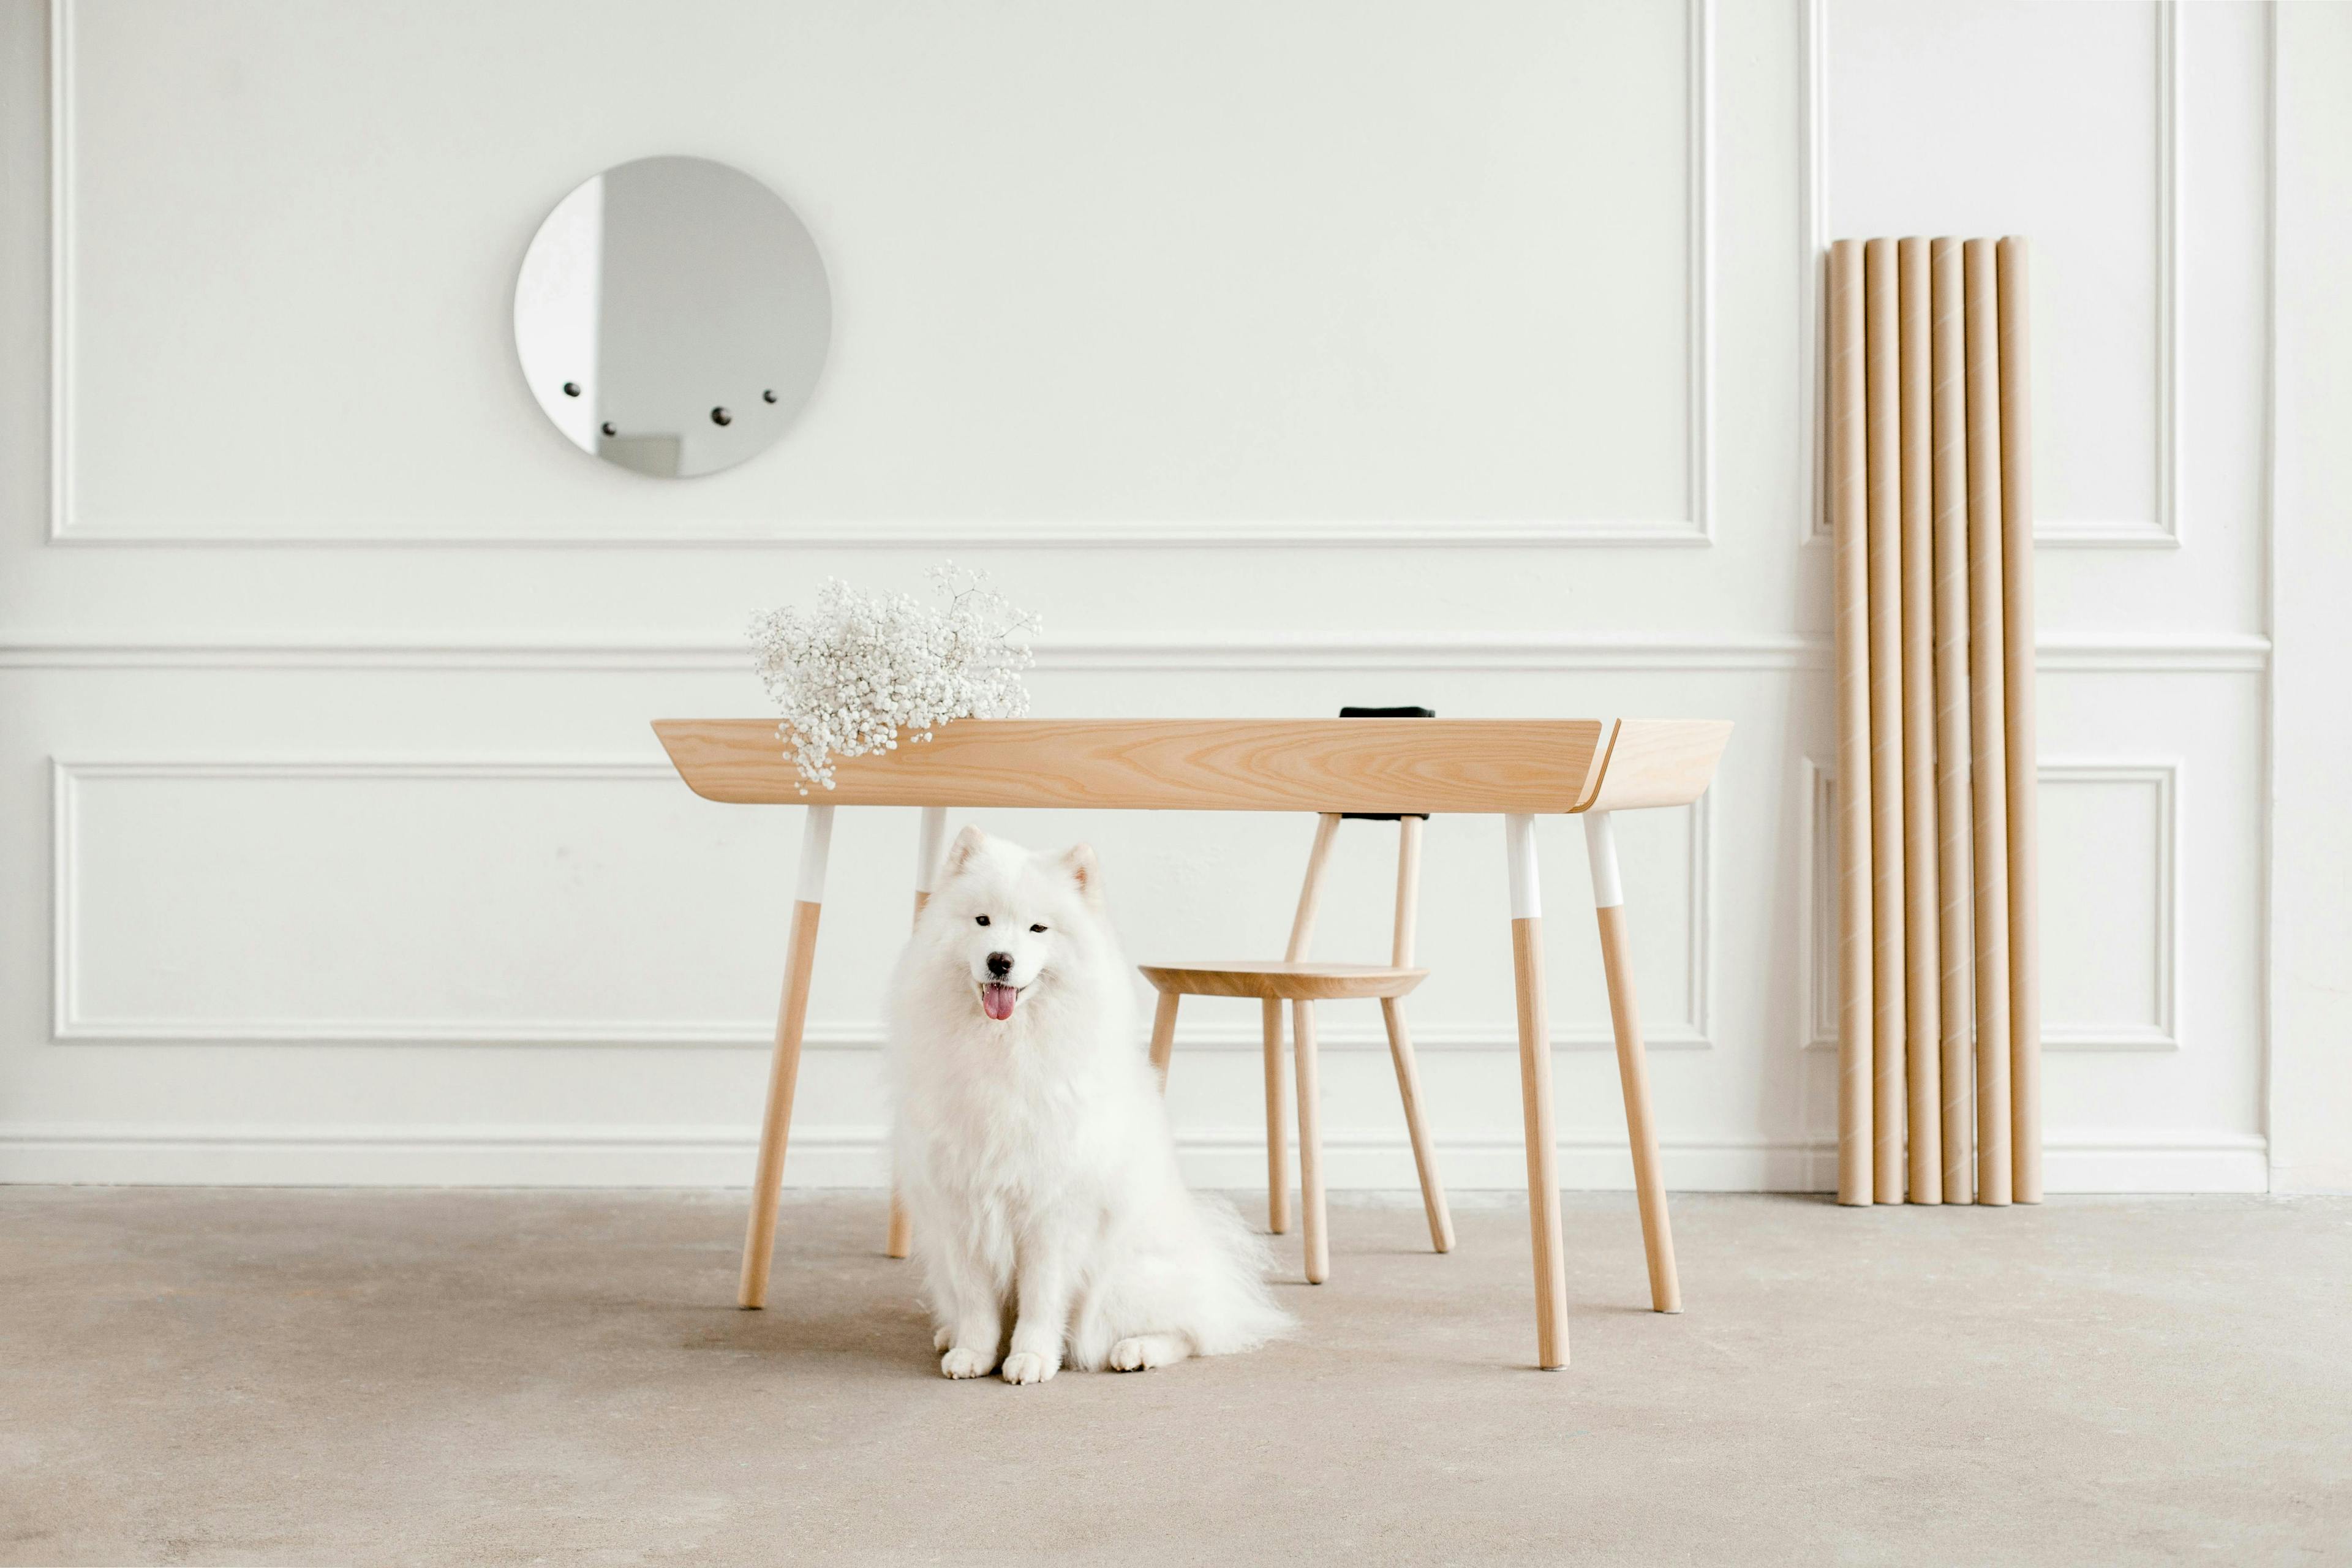 furniture home decor wood dog mammal animal canine pet table desk